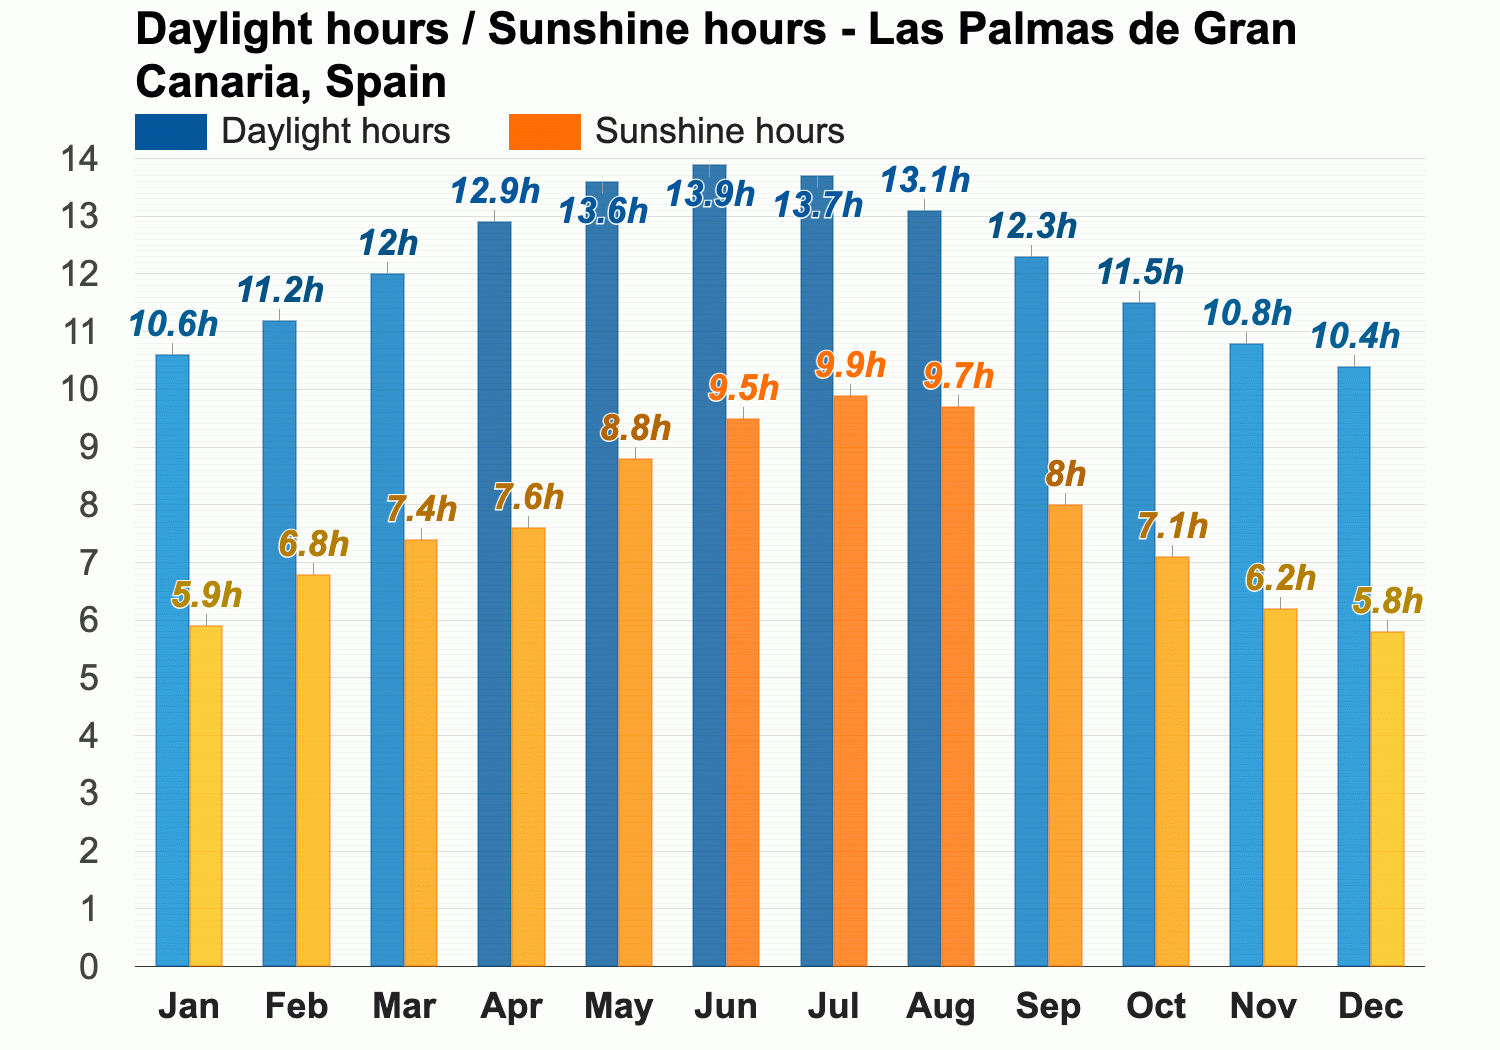 Las Palmas de Gran Canaria, Spain - November weather forecast and climate  information | Weather Atlas